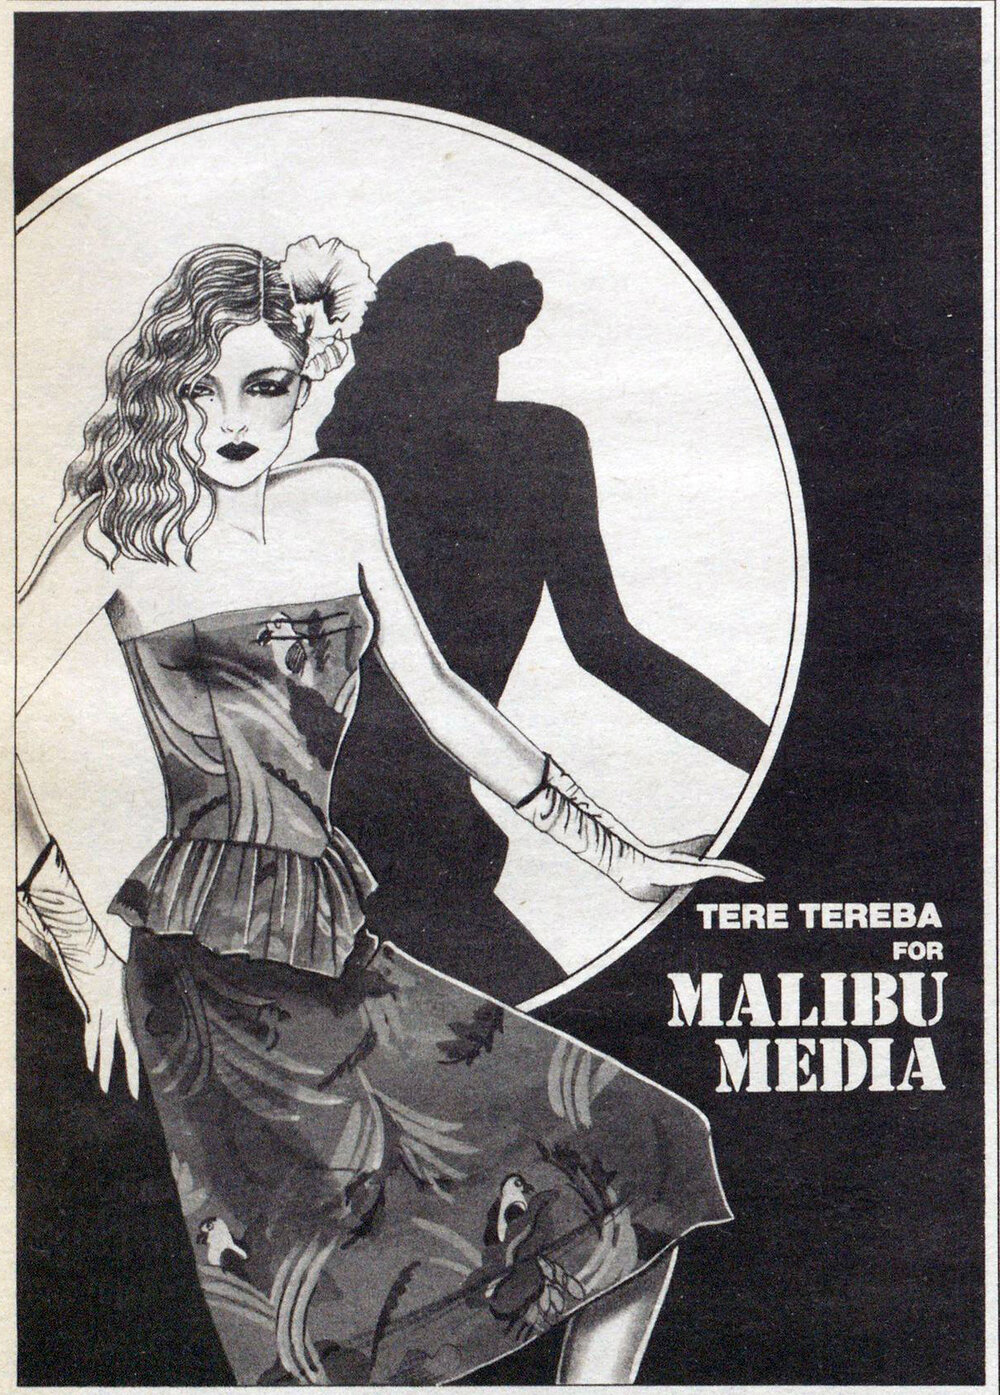 Malibu Media ad. WWD, October 3, 1979.